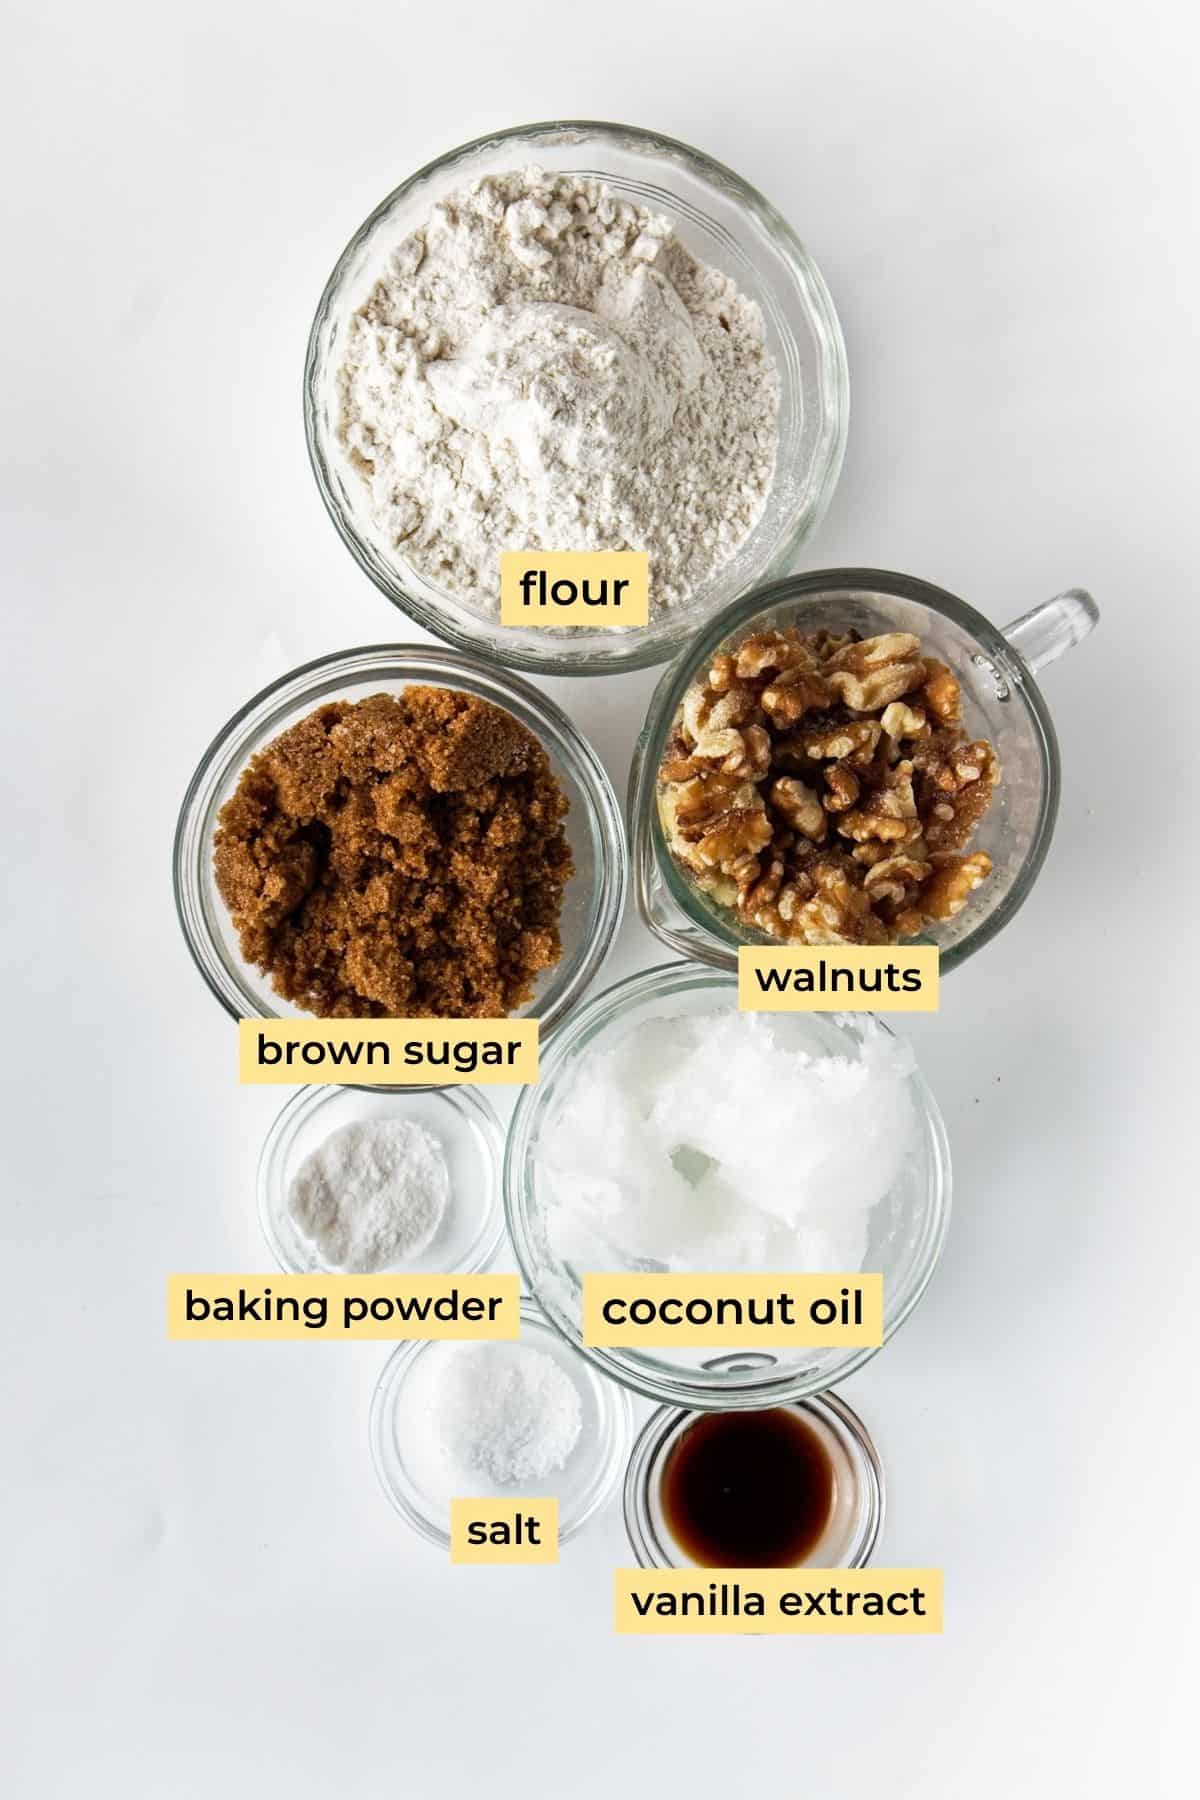 Walnut shortbreads ingredients: flour, brown sugar, walnuts, baking powder, coconut oil, salt, vanilla extract.